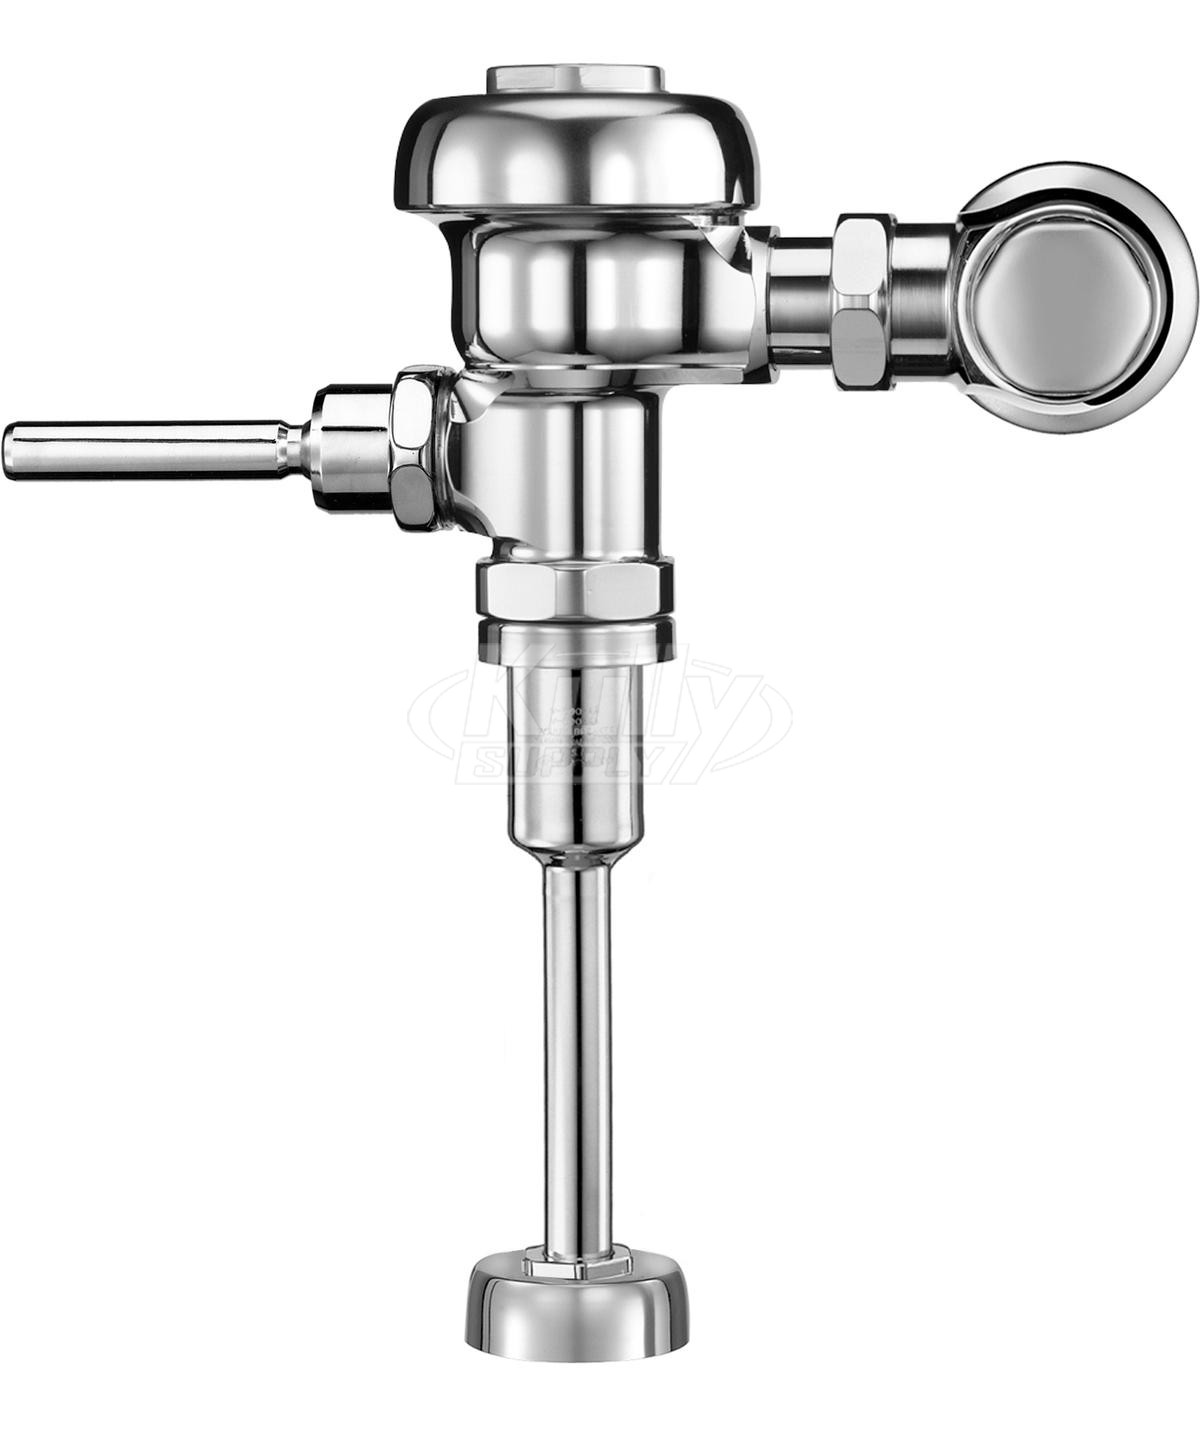 Sloan 180-1 DFB Urinal 1.0 GPF Flushometer